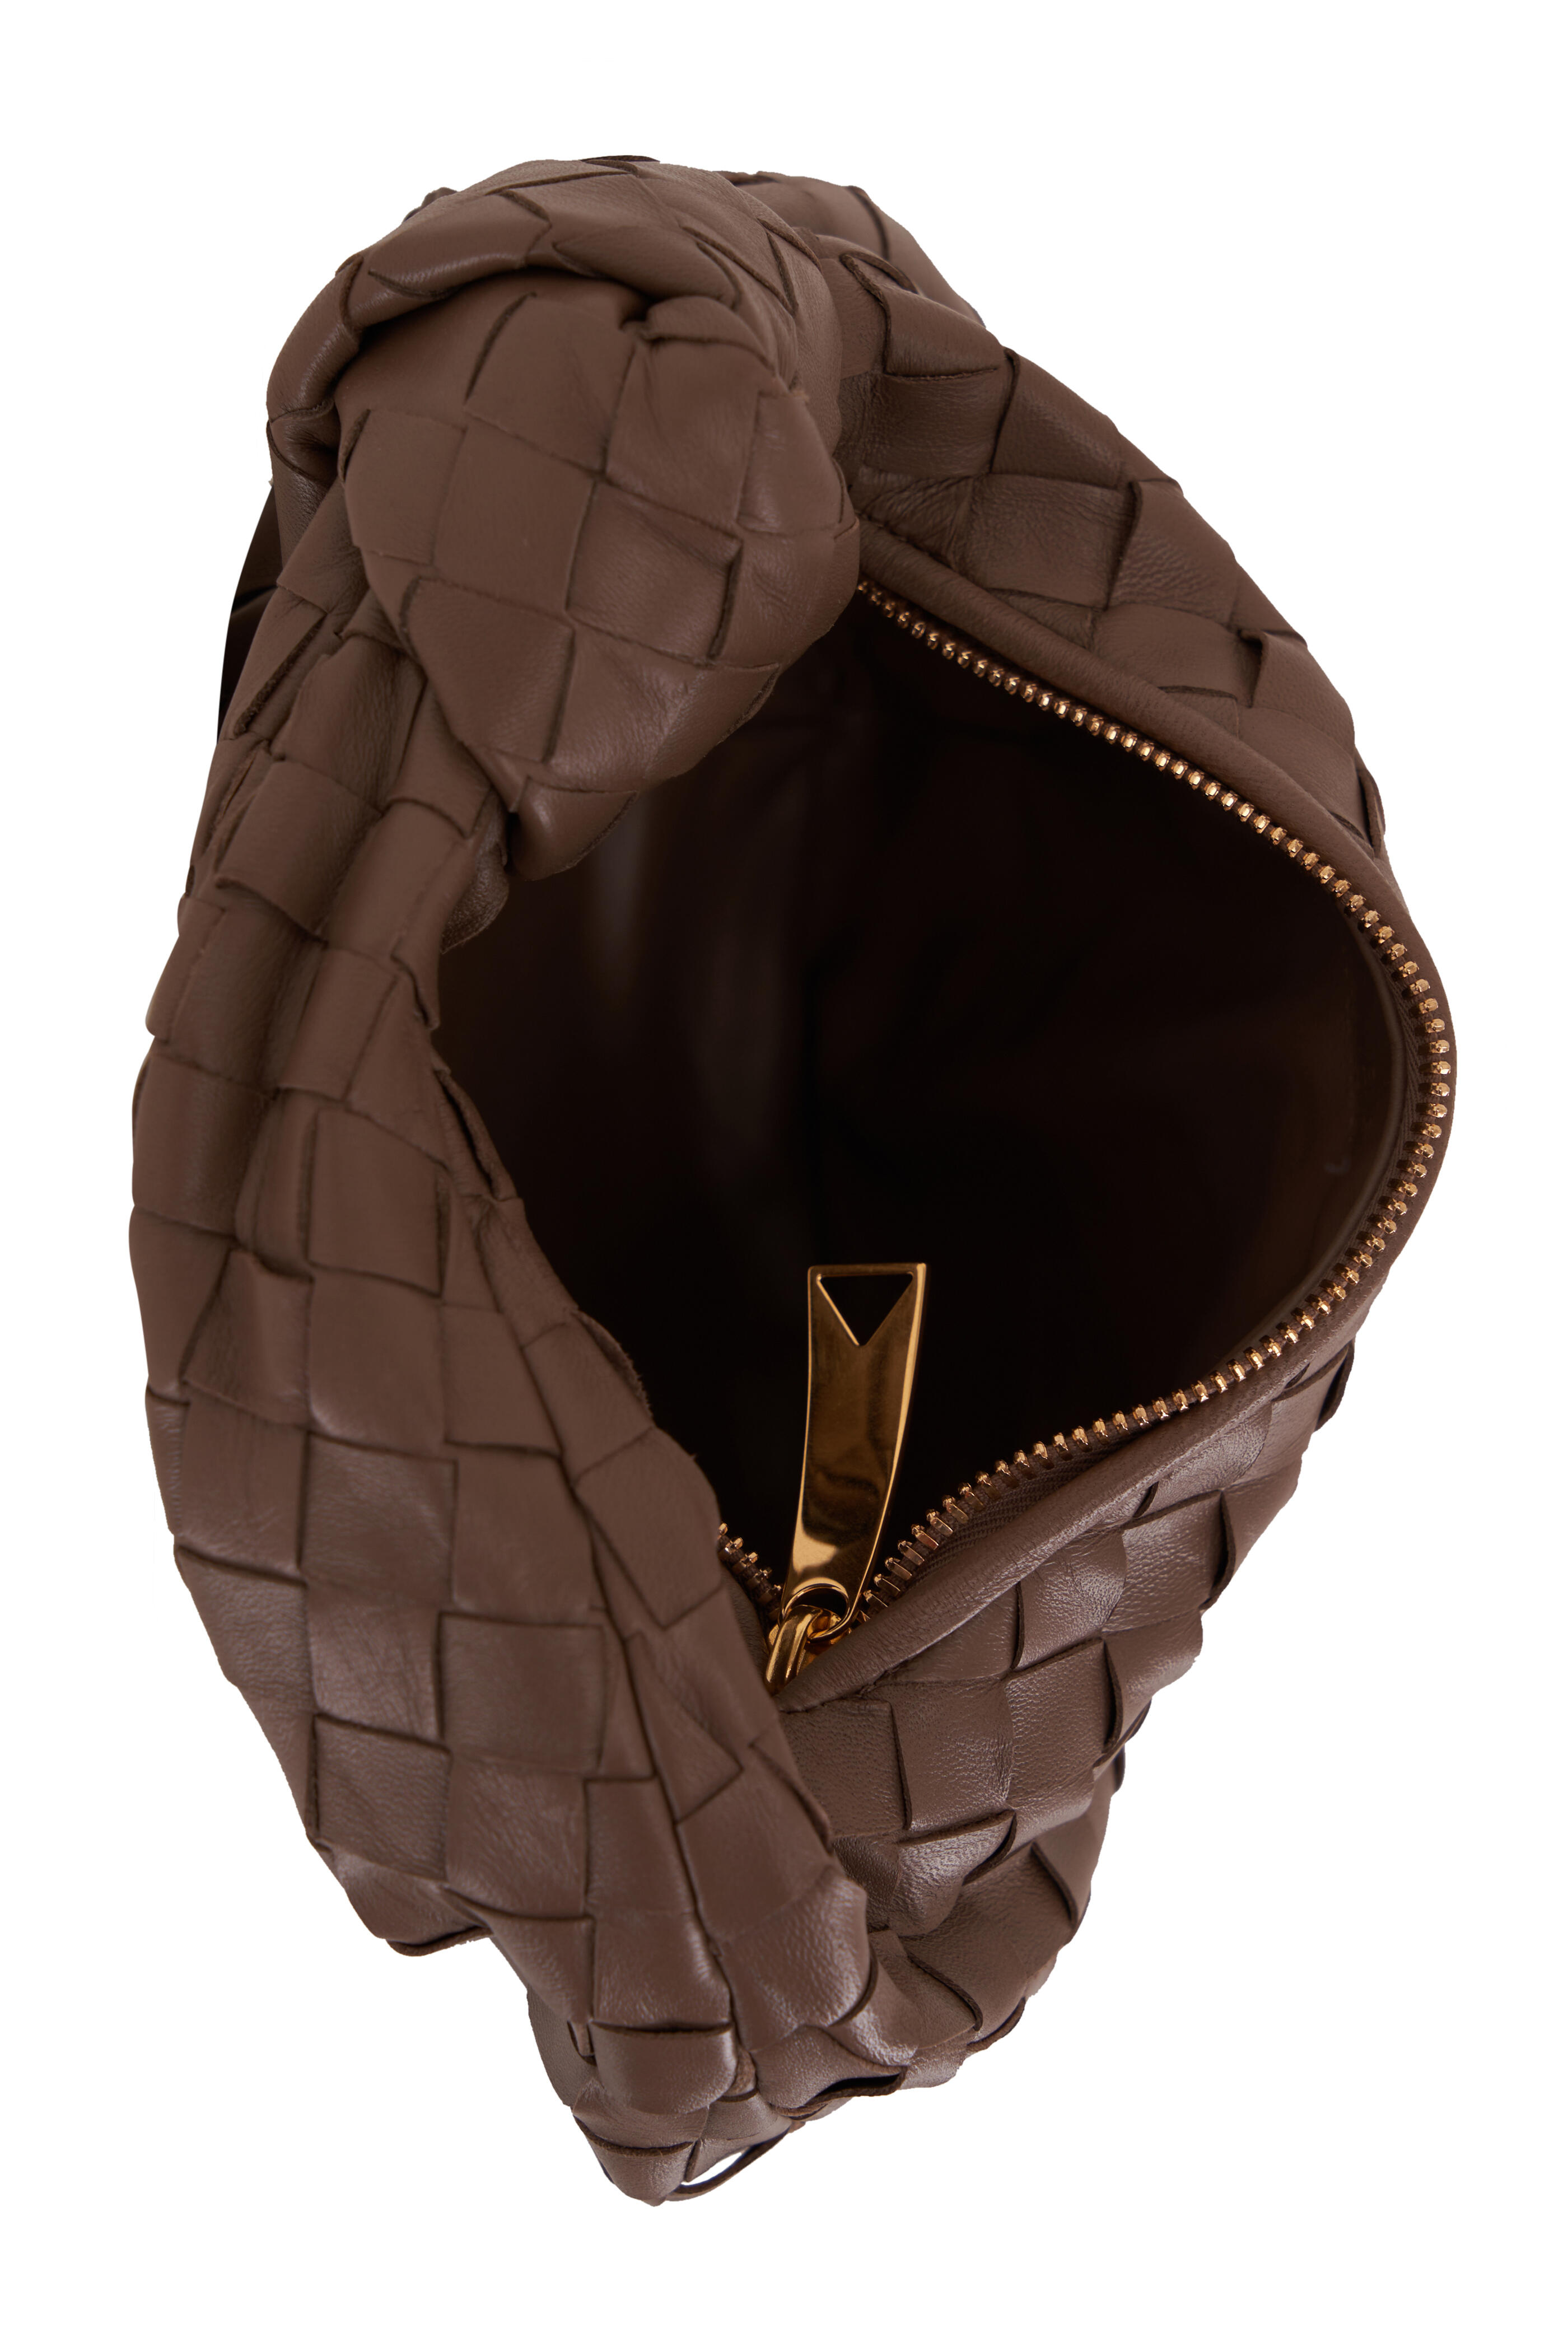 Bottega Veneta Women's Mini Jodie Macaroon Woven Hobo Bag | by Mitchell Stores